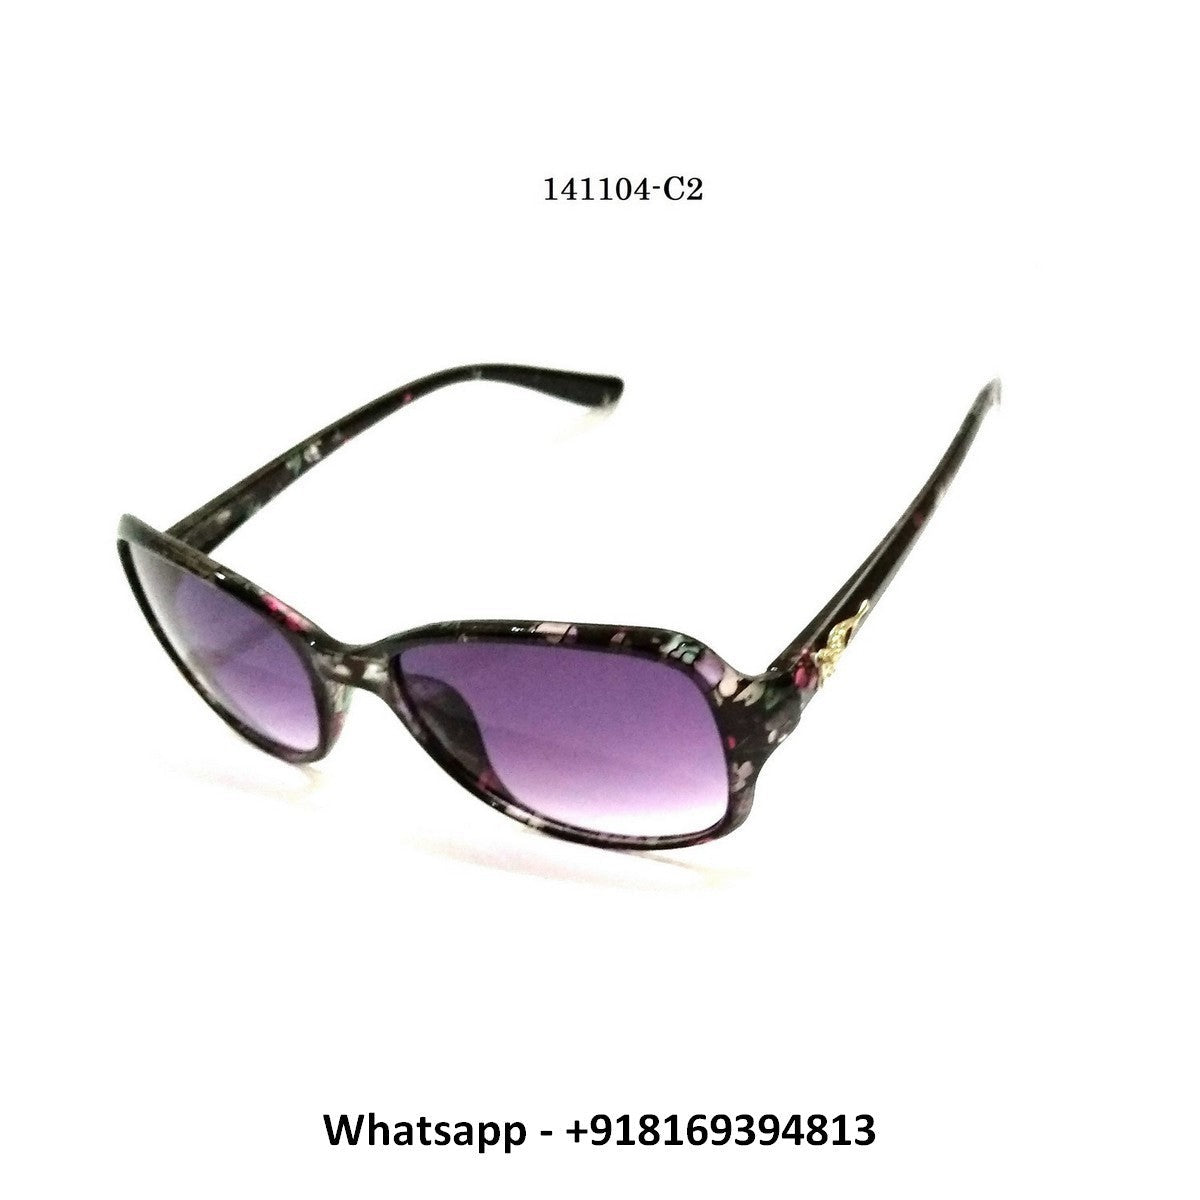 Floral Print Ladies Sunglasses for Women Model 1141004C2 - Glasses India Online